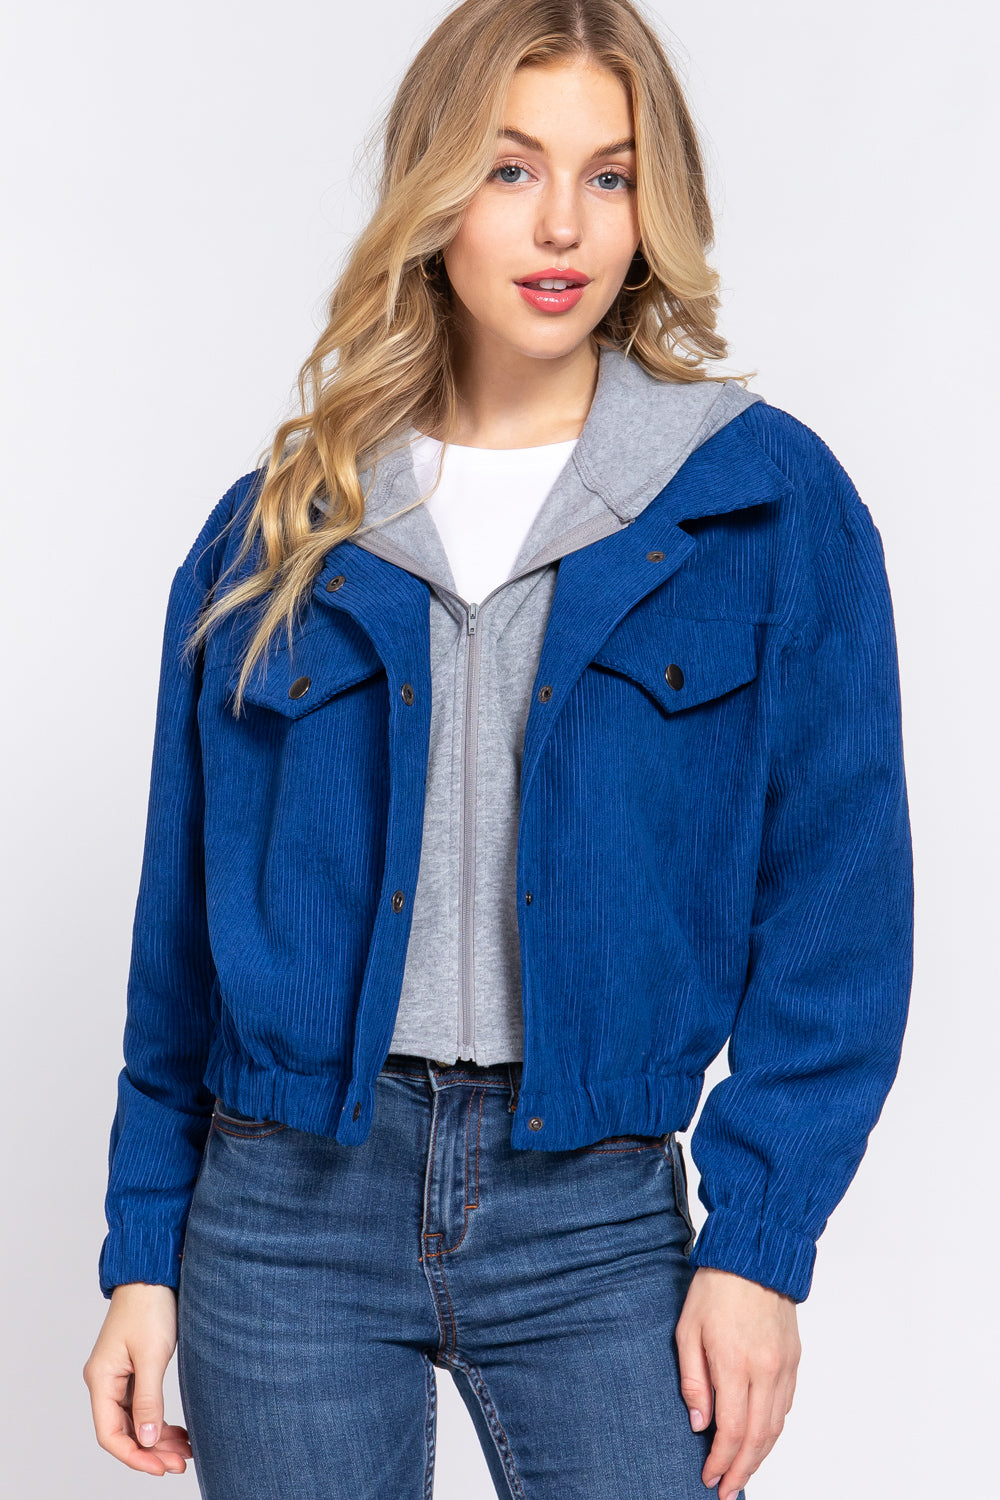 Blue Long Slv Hooded Corduroy Jacket - 5 colors - women's jacket at TFC&H Co.